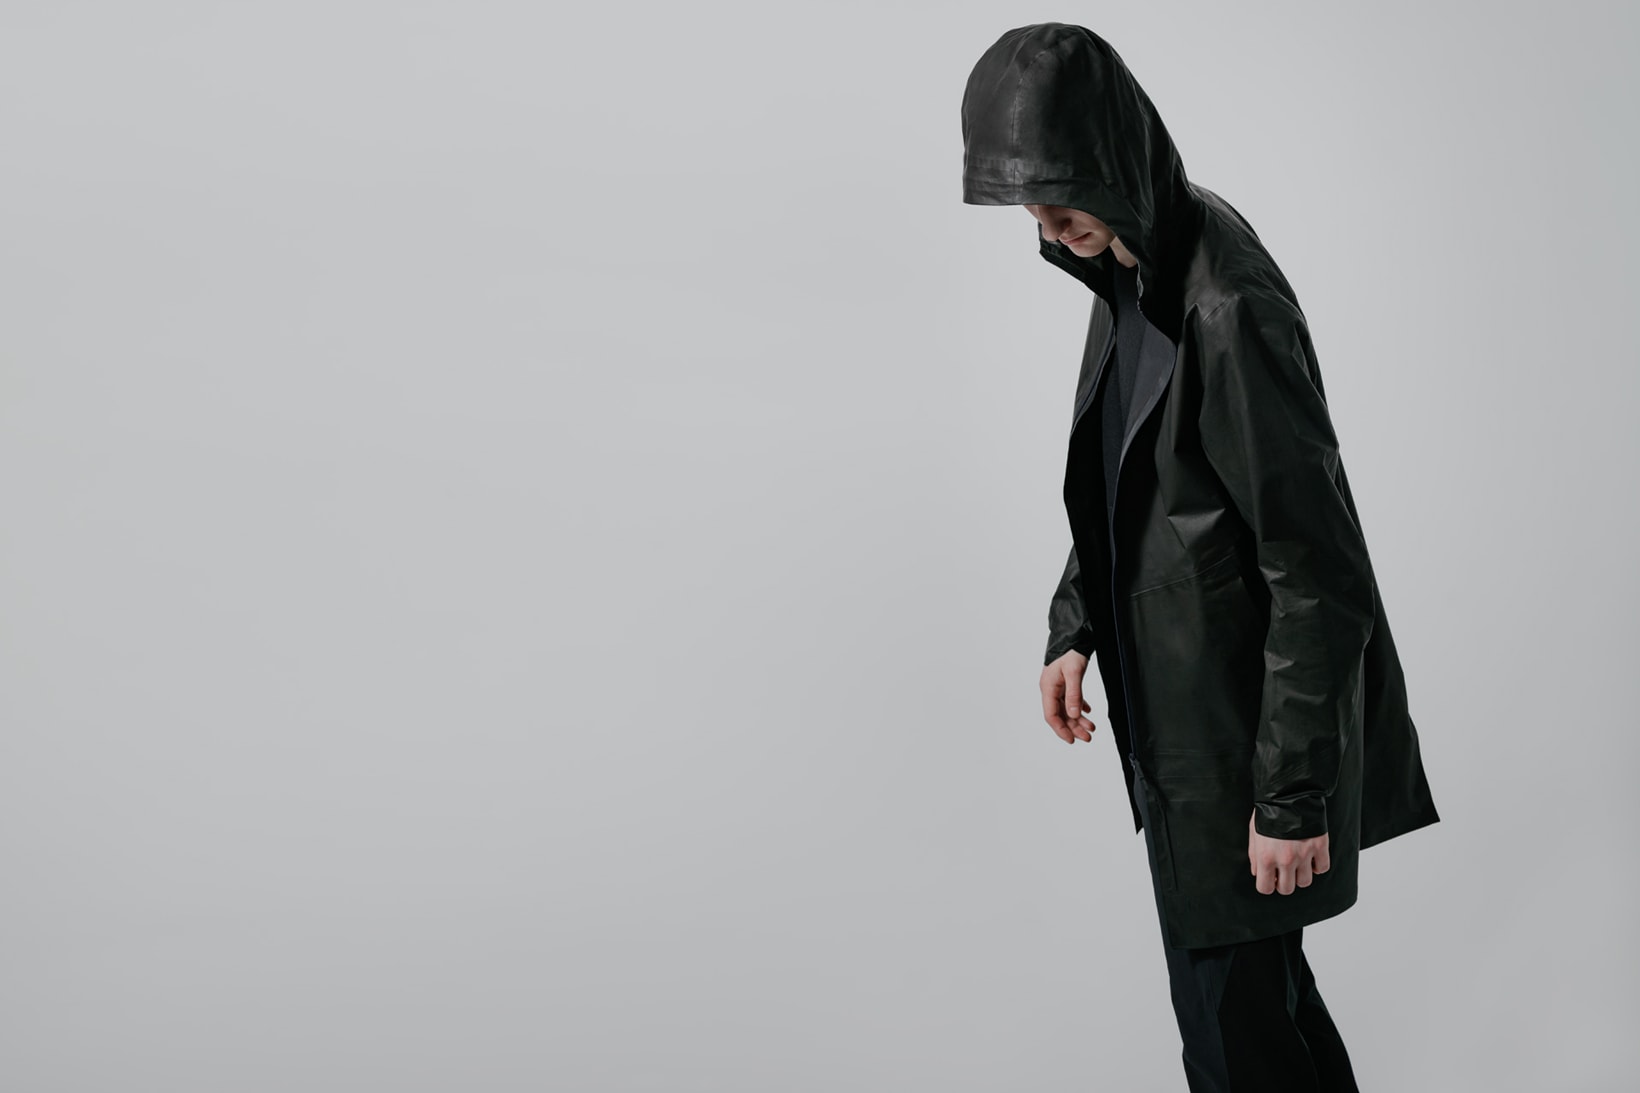 Arc'teryx Veilance fashion style menswear apparel clothing jackets outerwear